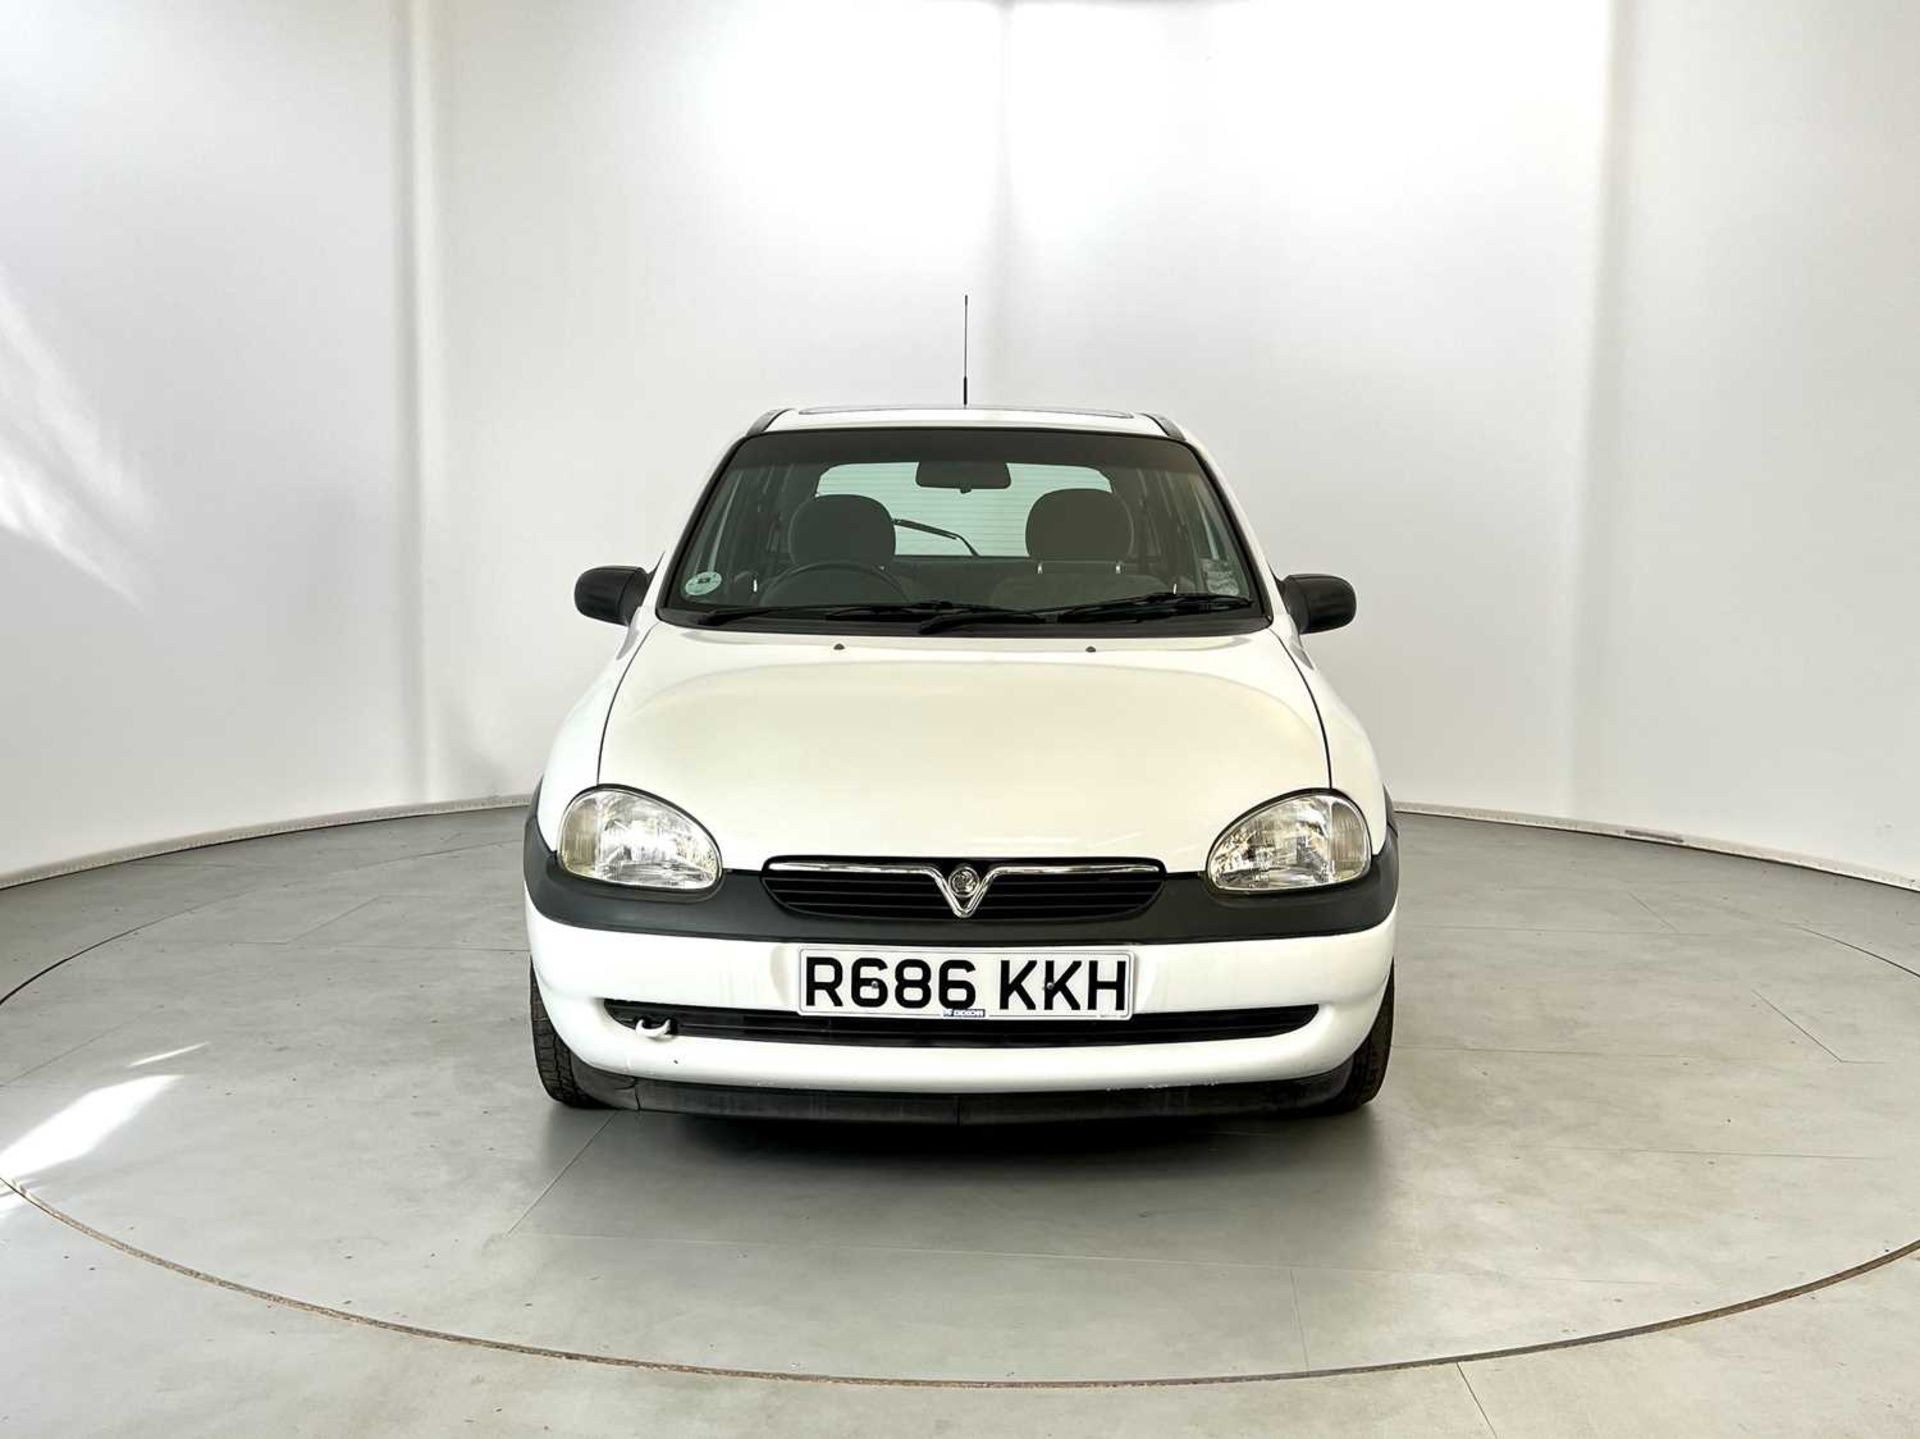 1997 Vauxhall Corsa - Image 2 of 34